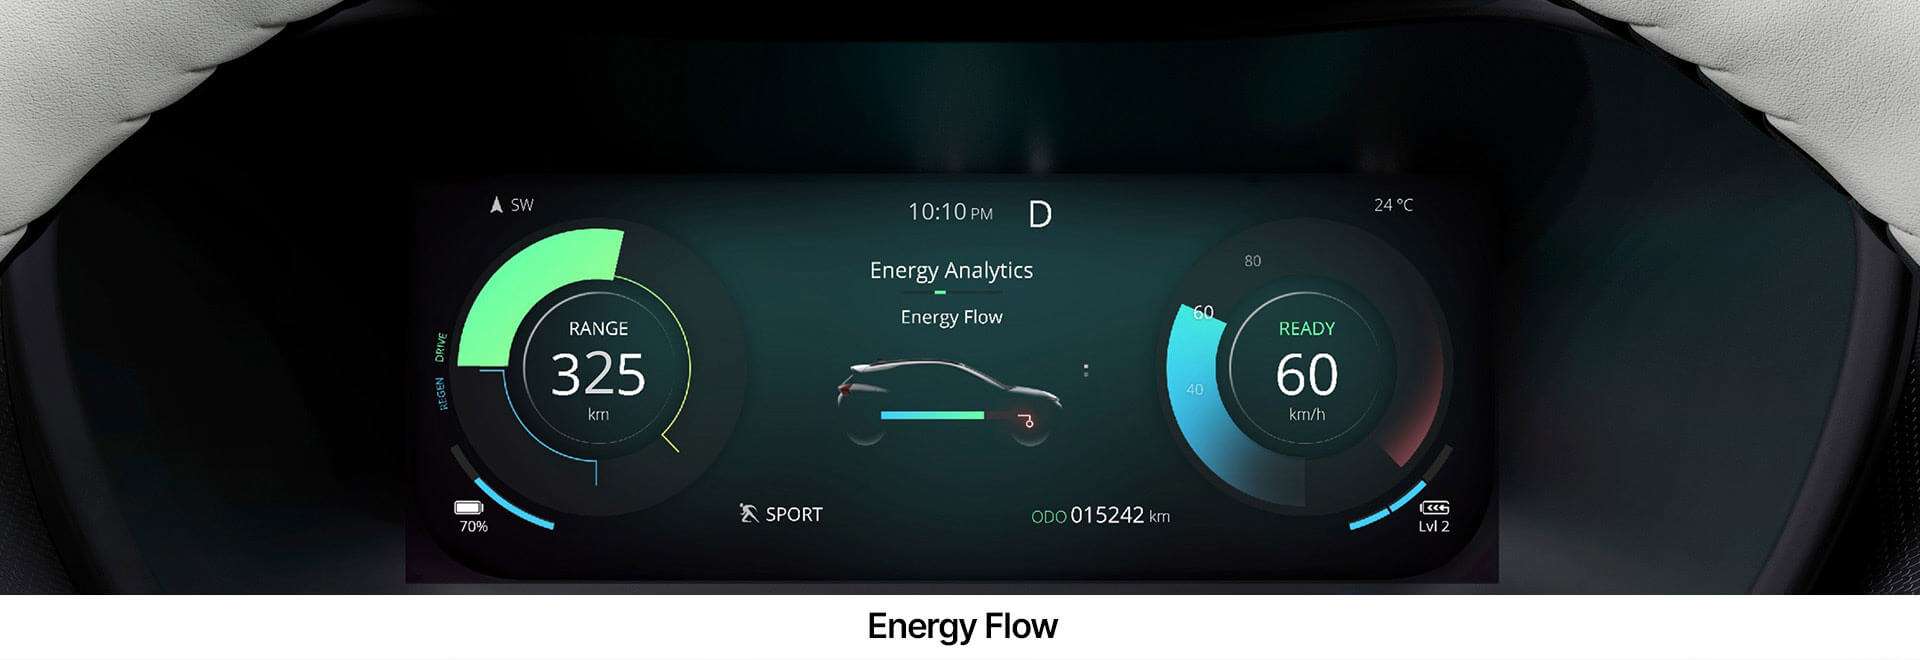 Energy-Flow__1920x660.jpg